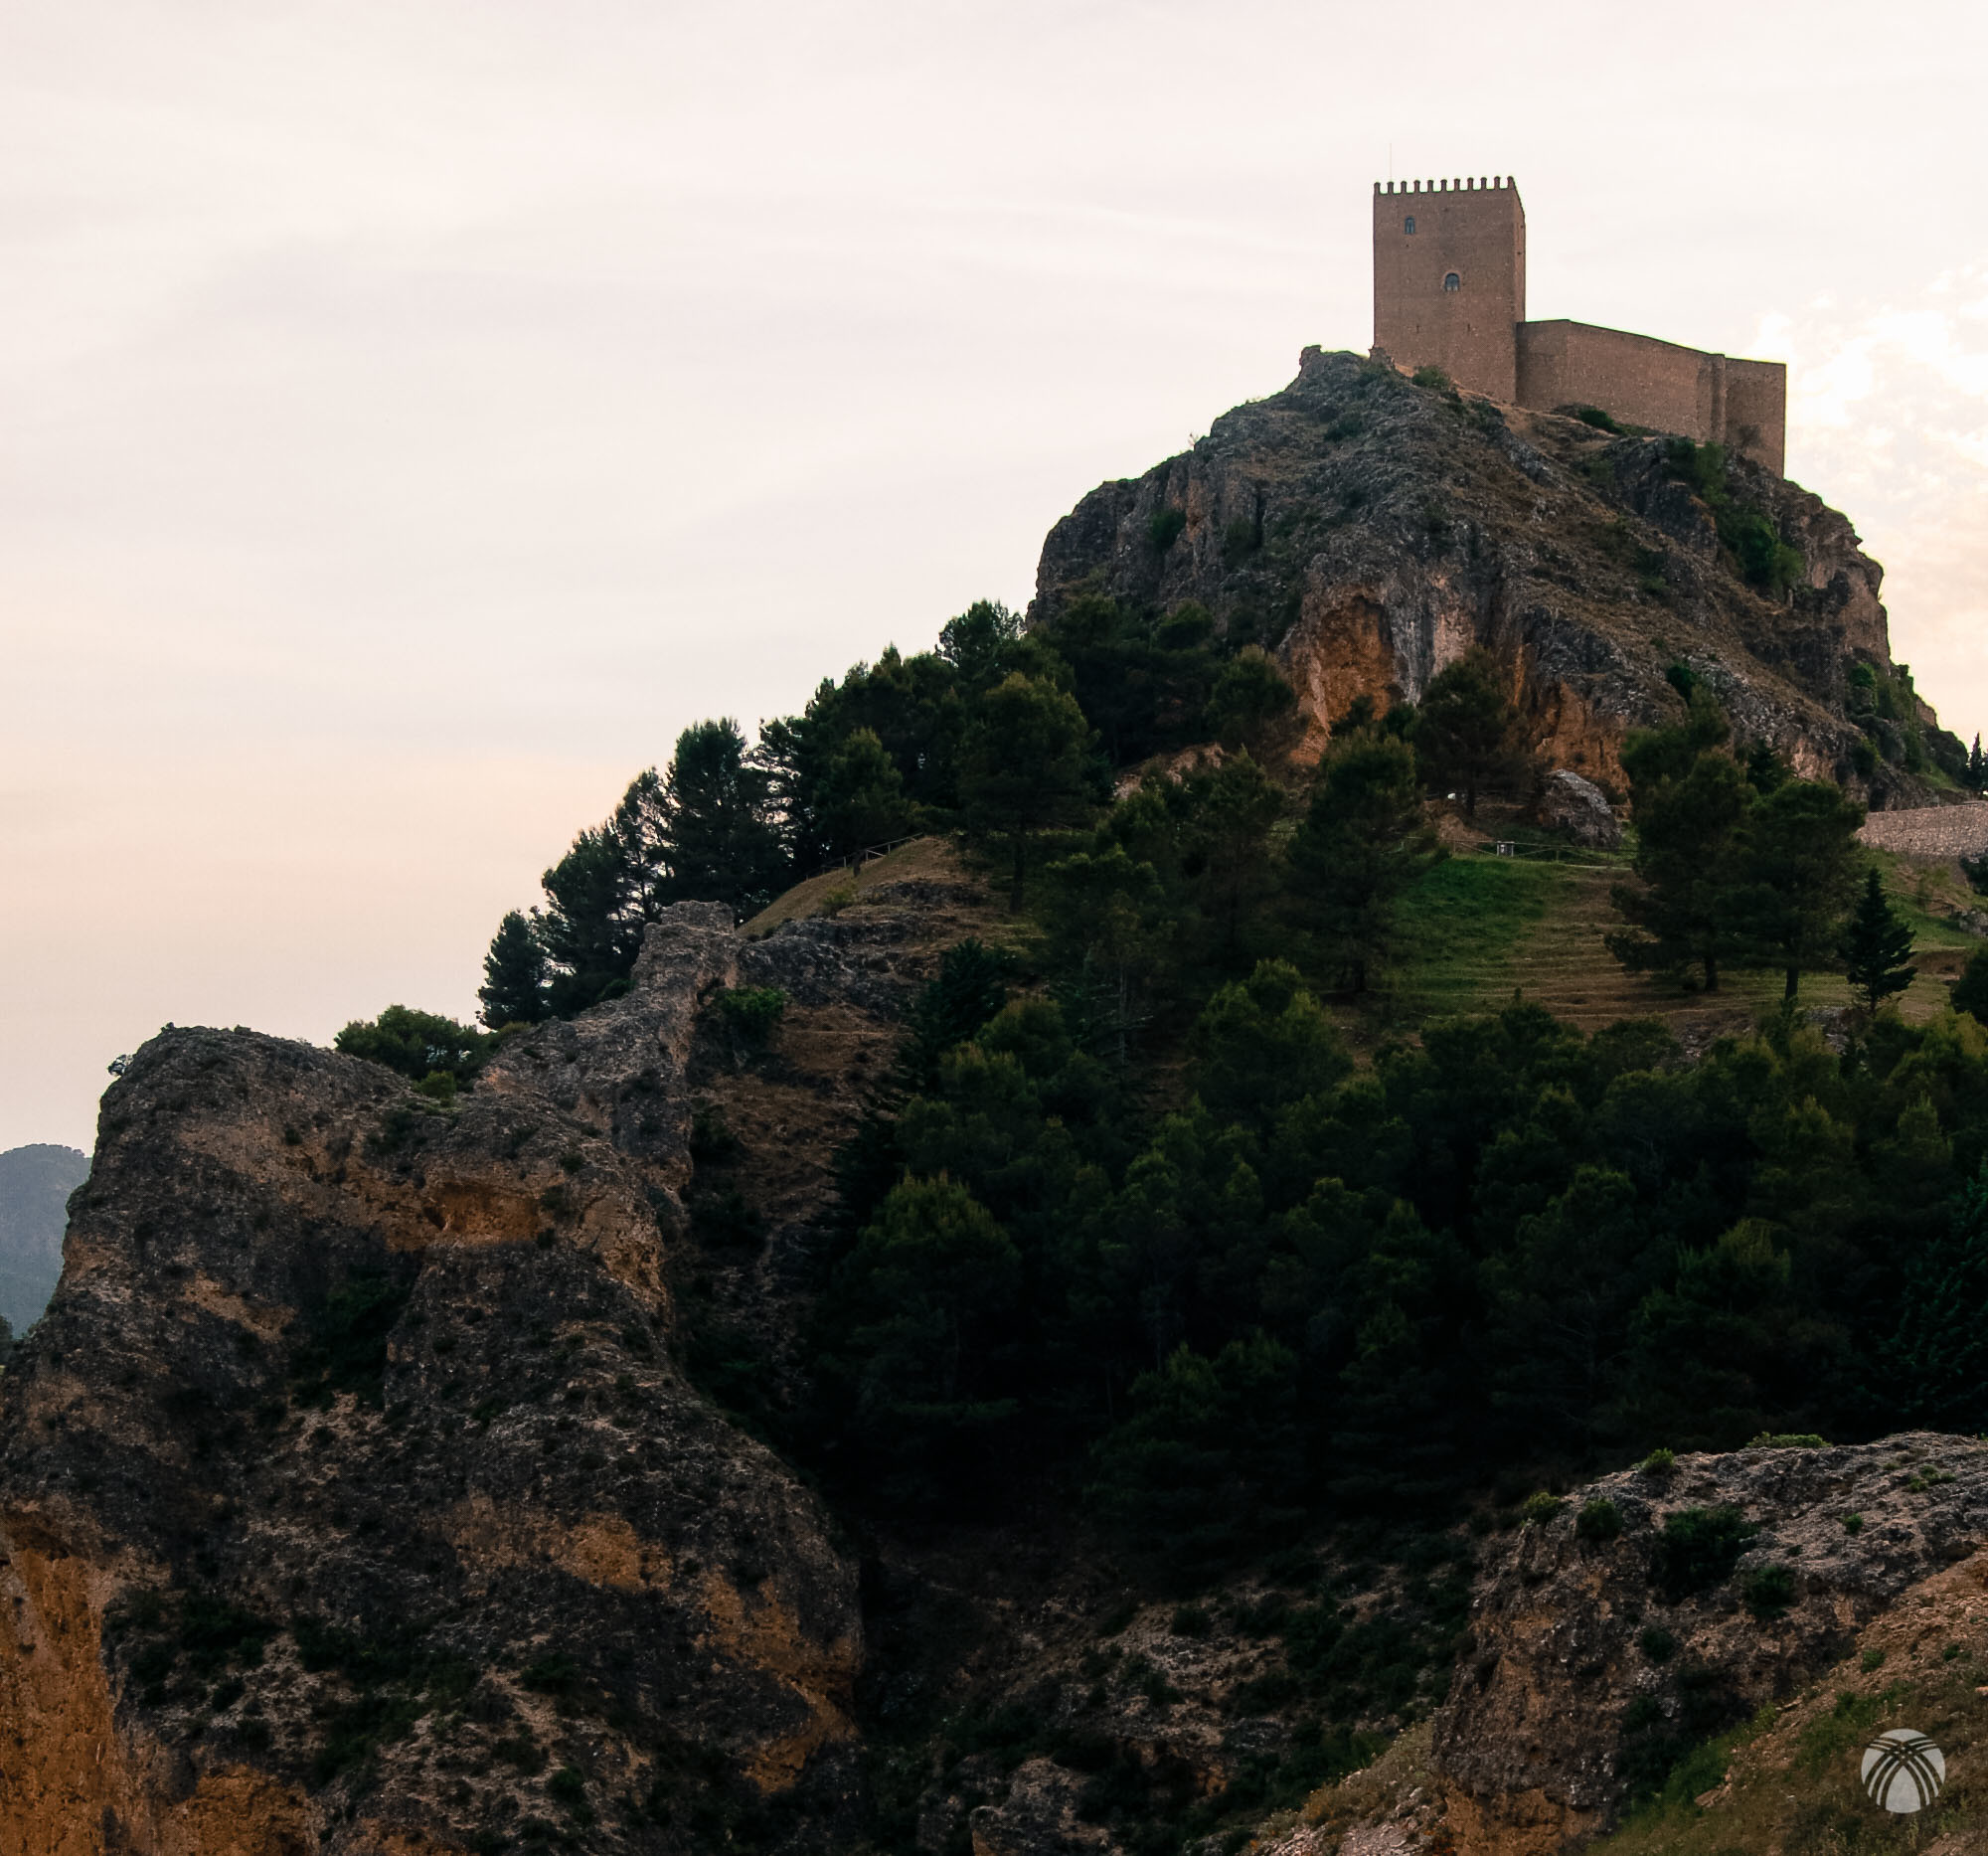 Castillo de Segura